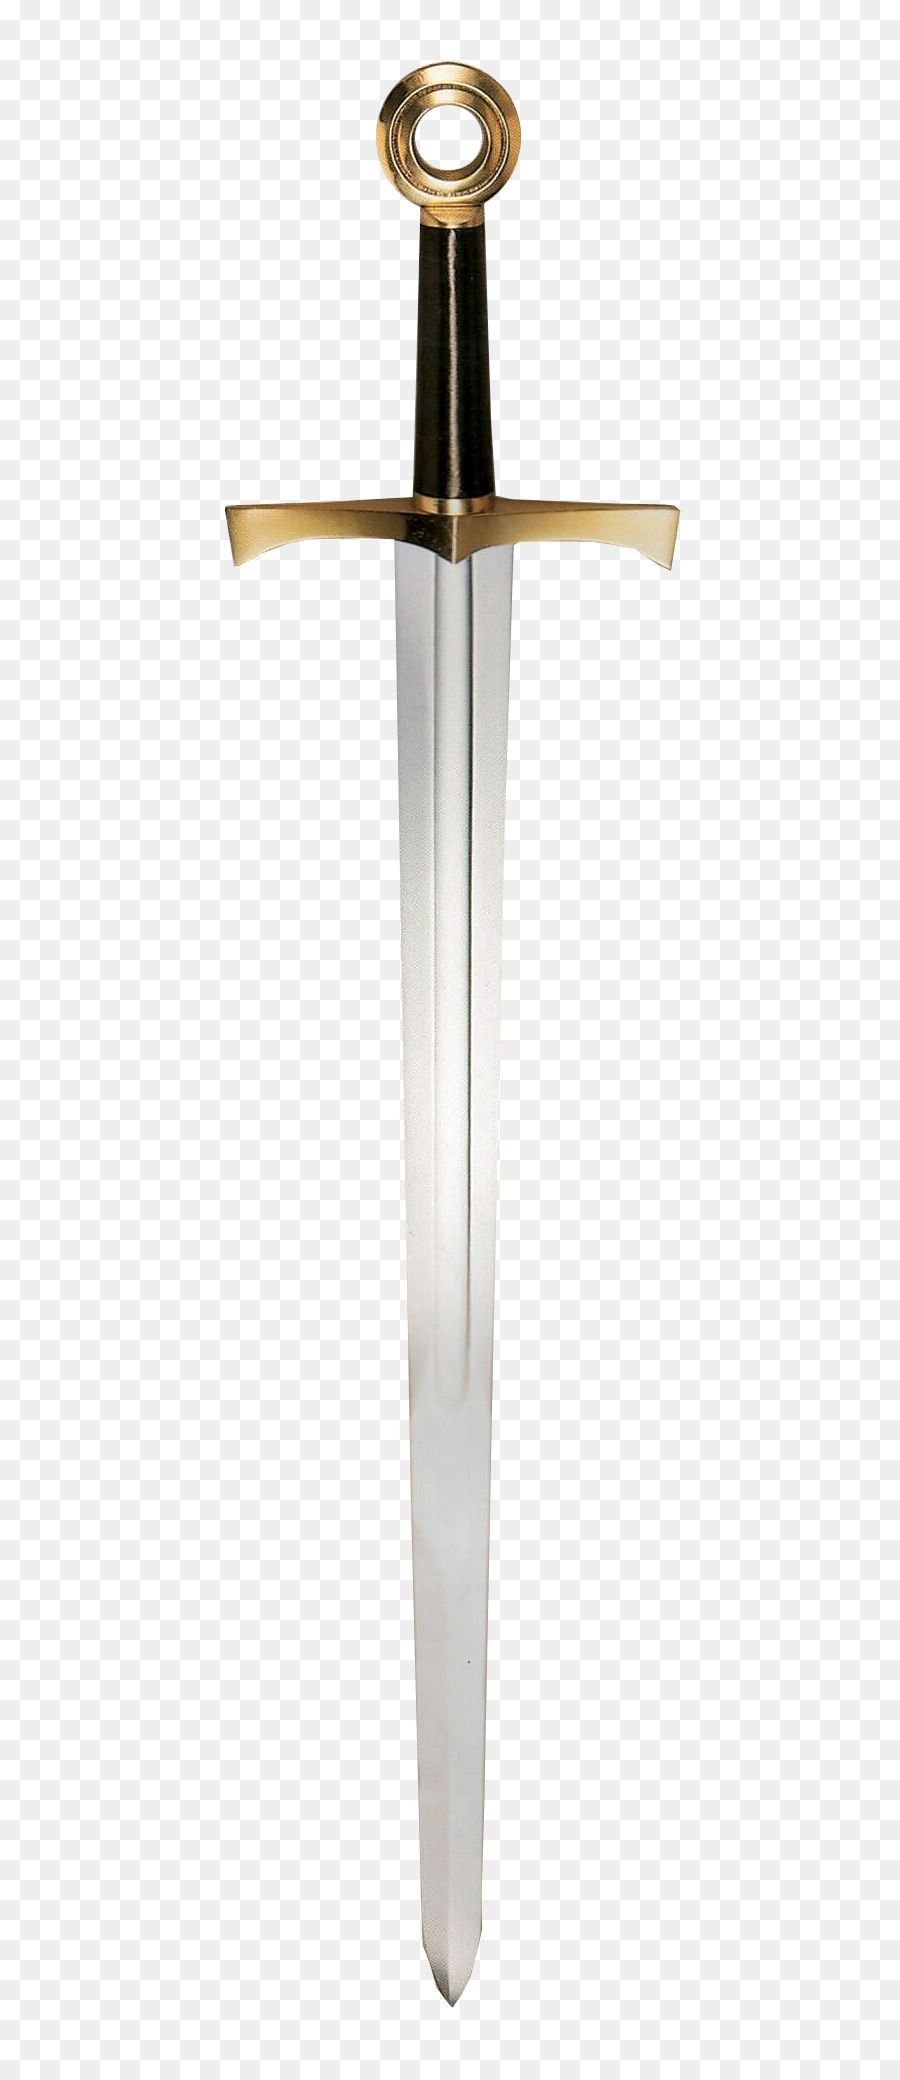 Ancient Sword png download - 588*2064 - Free Transparent Sword png